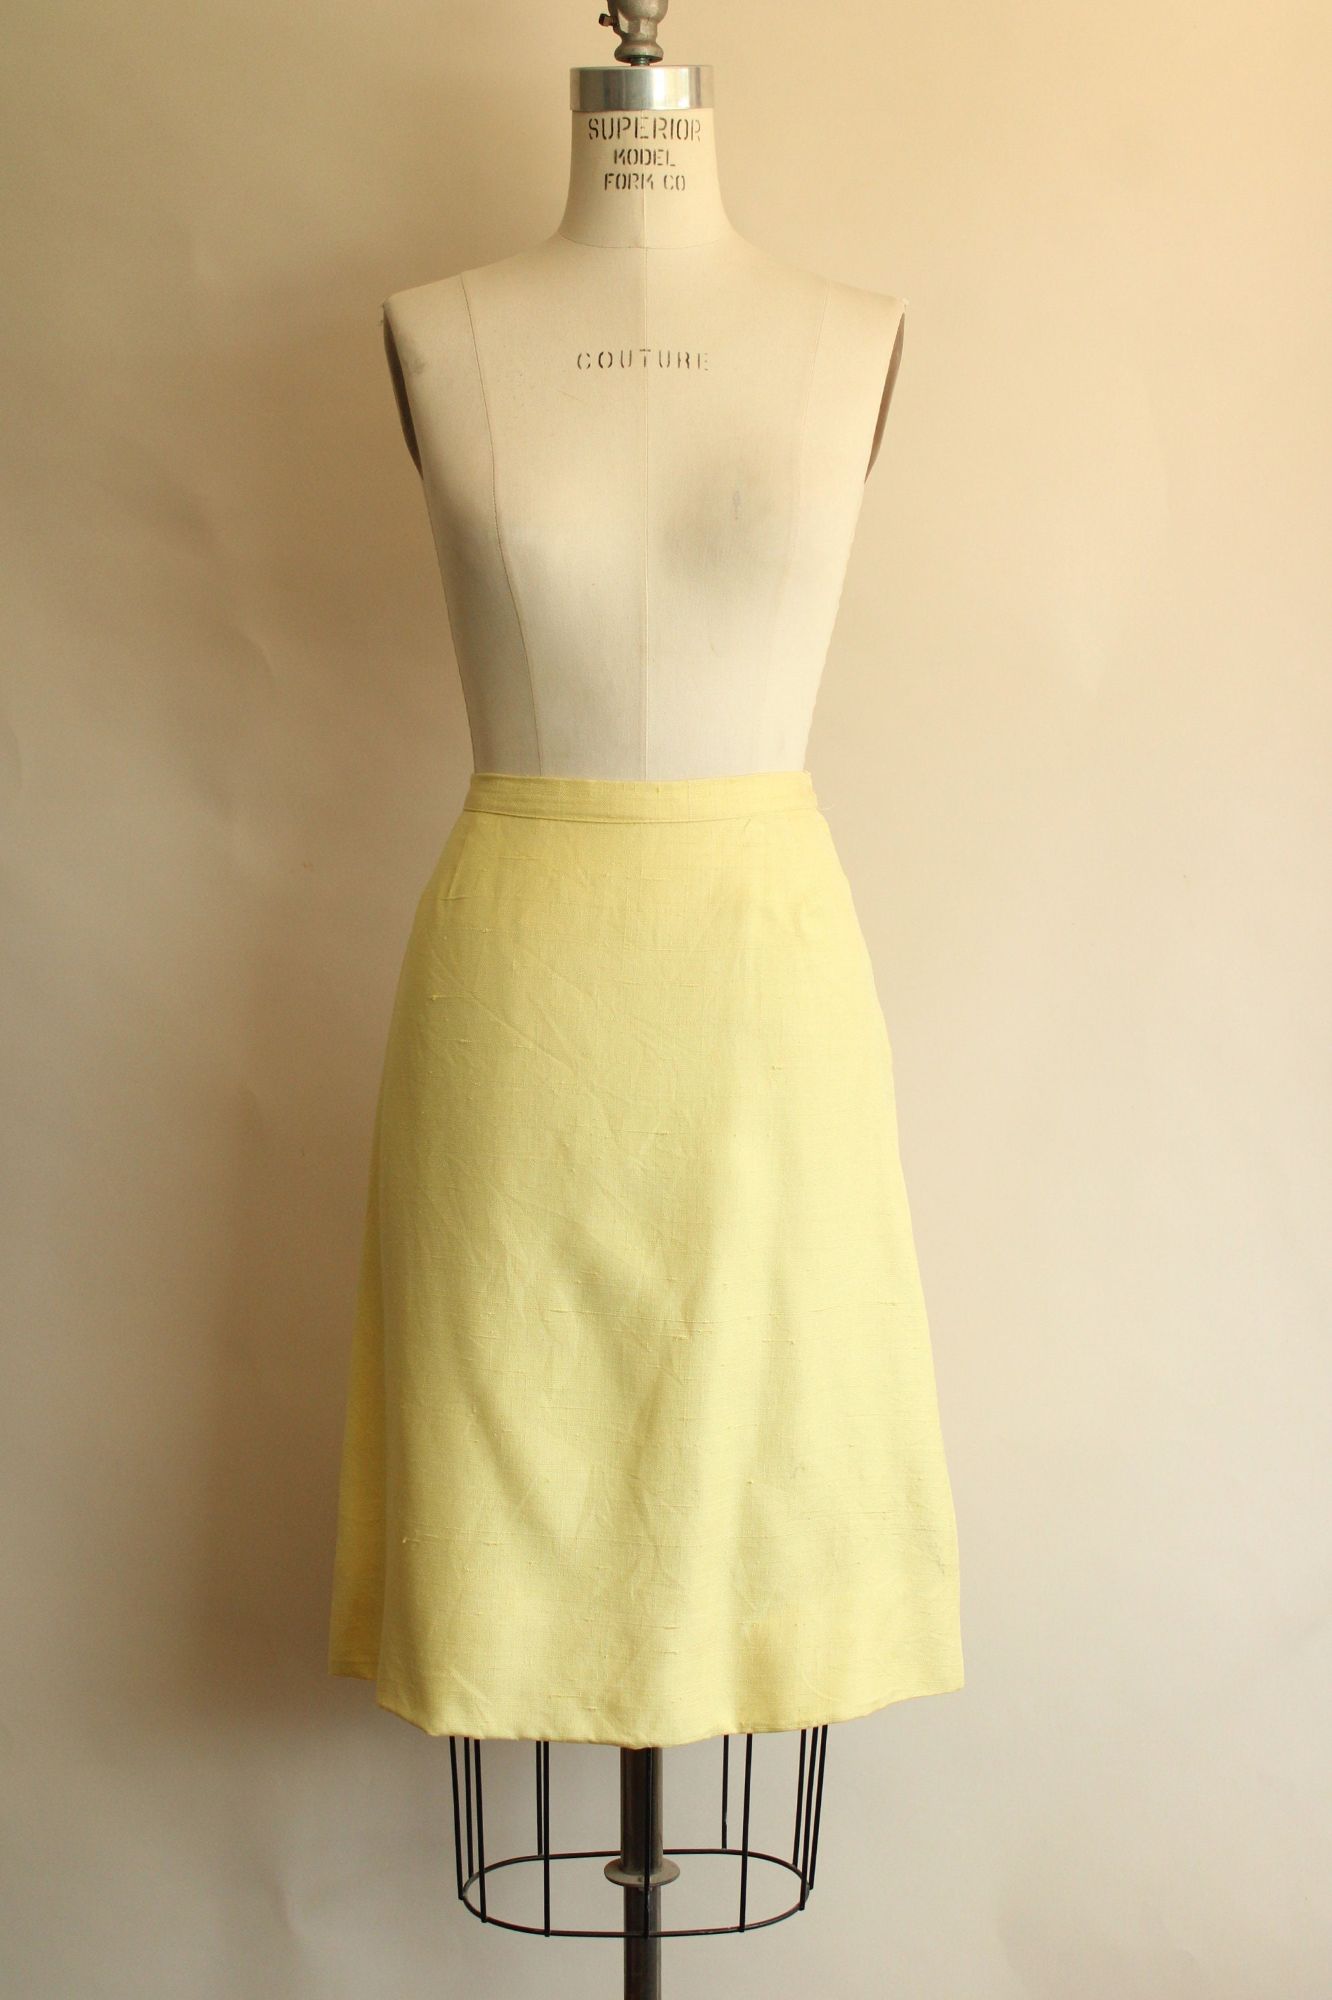 Vintage 1960s Vogue Paris Original Yellow Linen Three Piece Suit